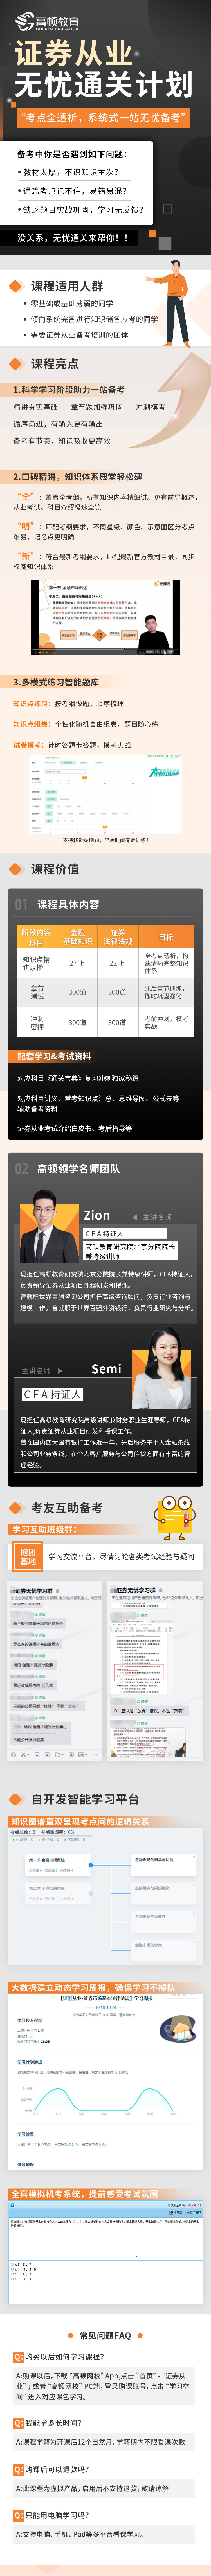 https://simg01.gaodunwangxiao.com/uploadfiles/product-center/202305/17/8c6bb_20230517164308.jpg